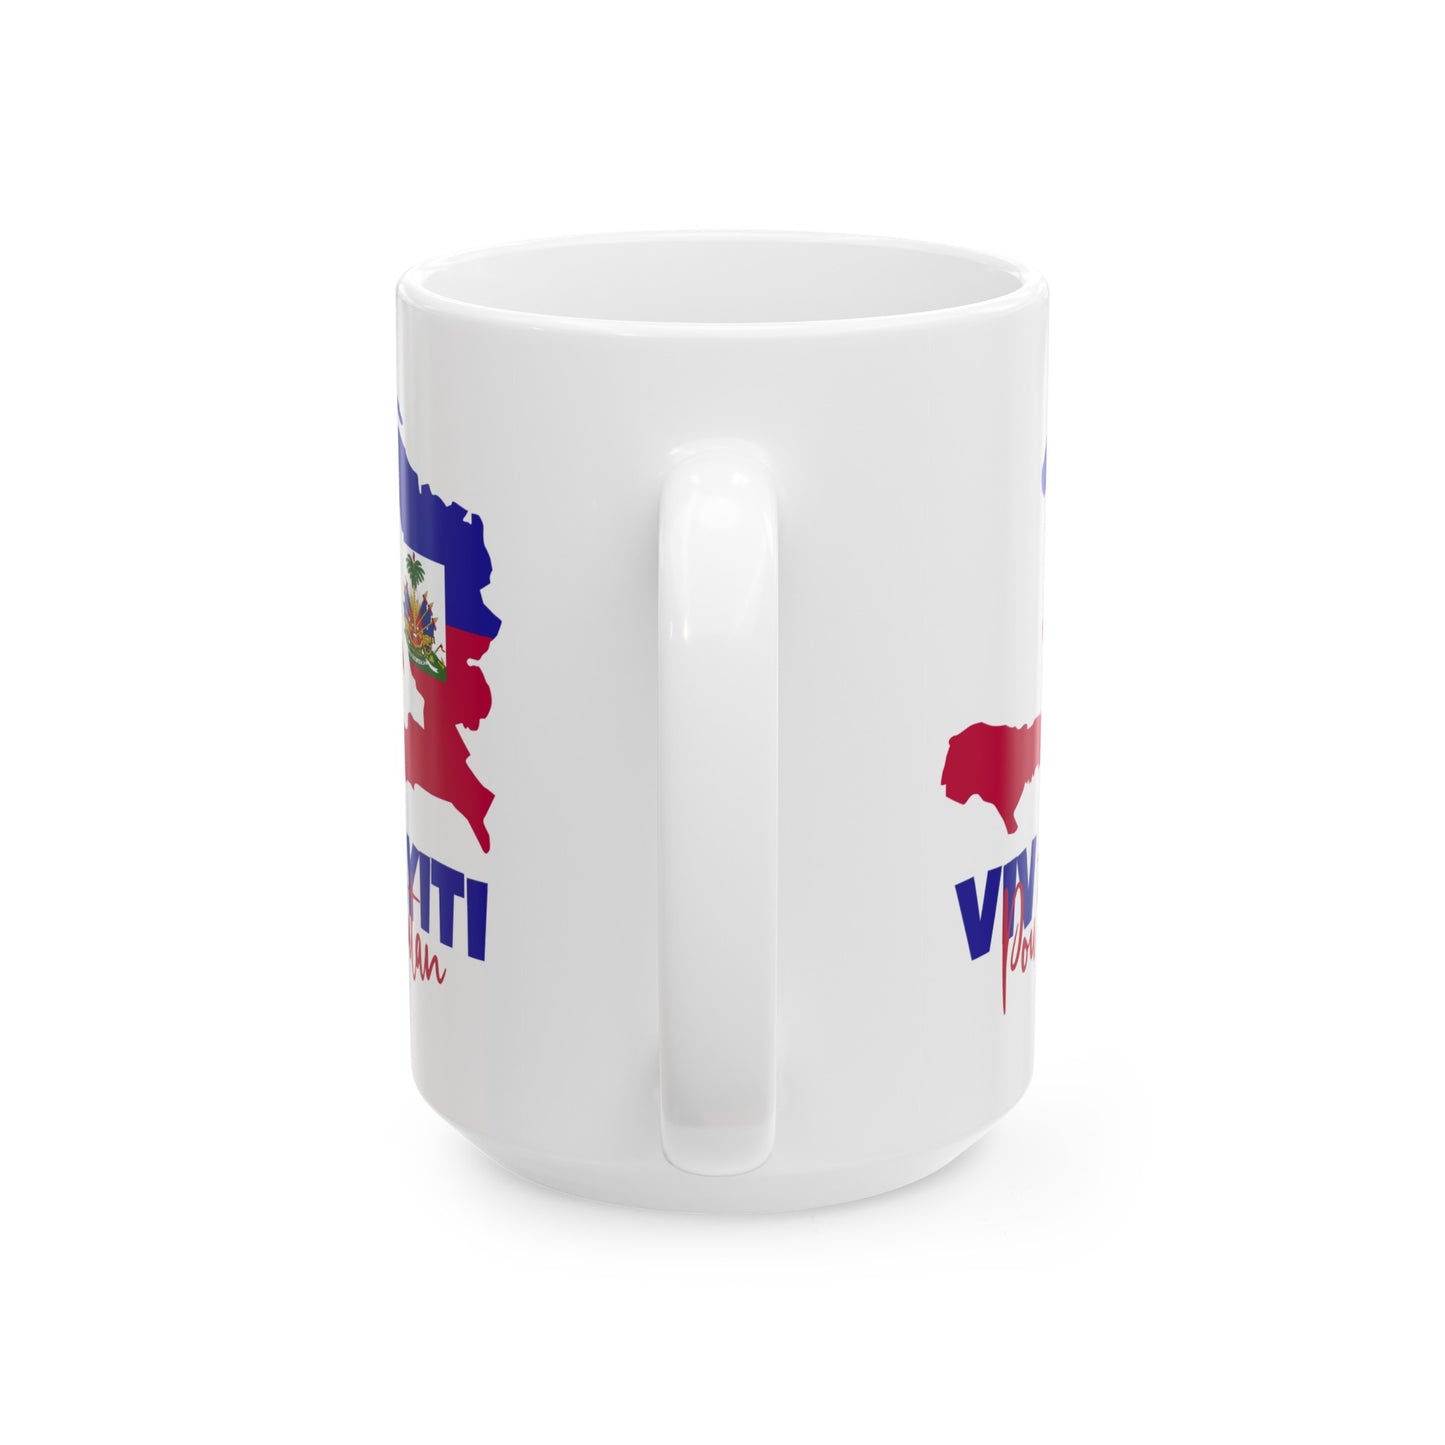 Viv Ayiti Pou Toutan Haitian Forever Haiti Ceramic Mug 11oz, 15oz Cup